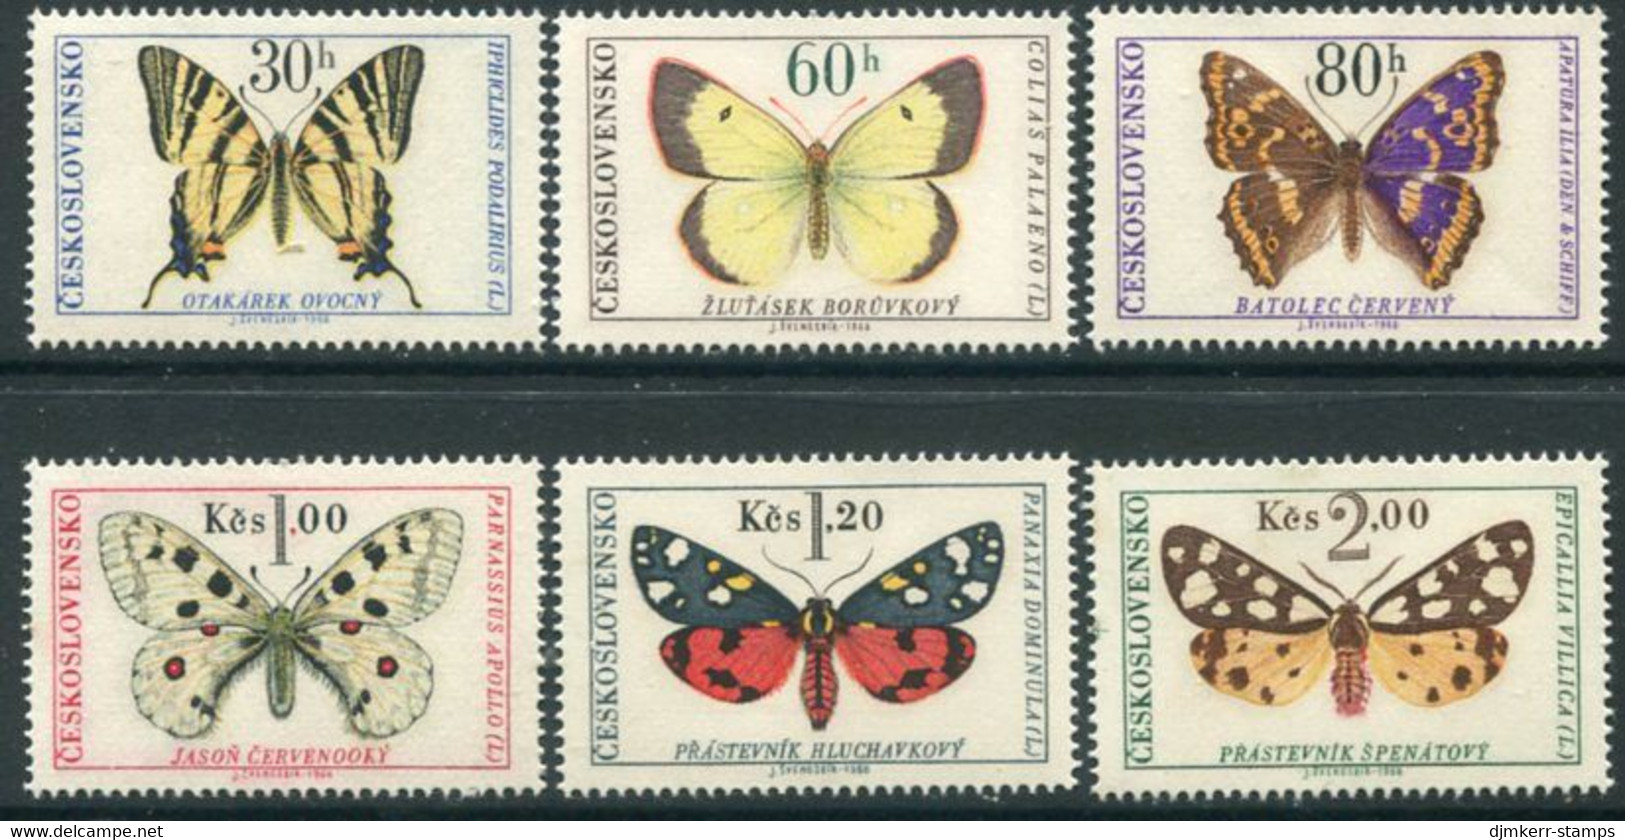 CZECHOSLOVAKIA 1966 Butterflies MNH / **.  Michel  1620-25 - Unused Stamps